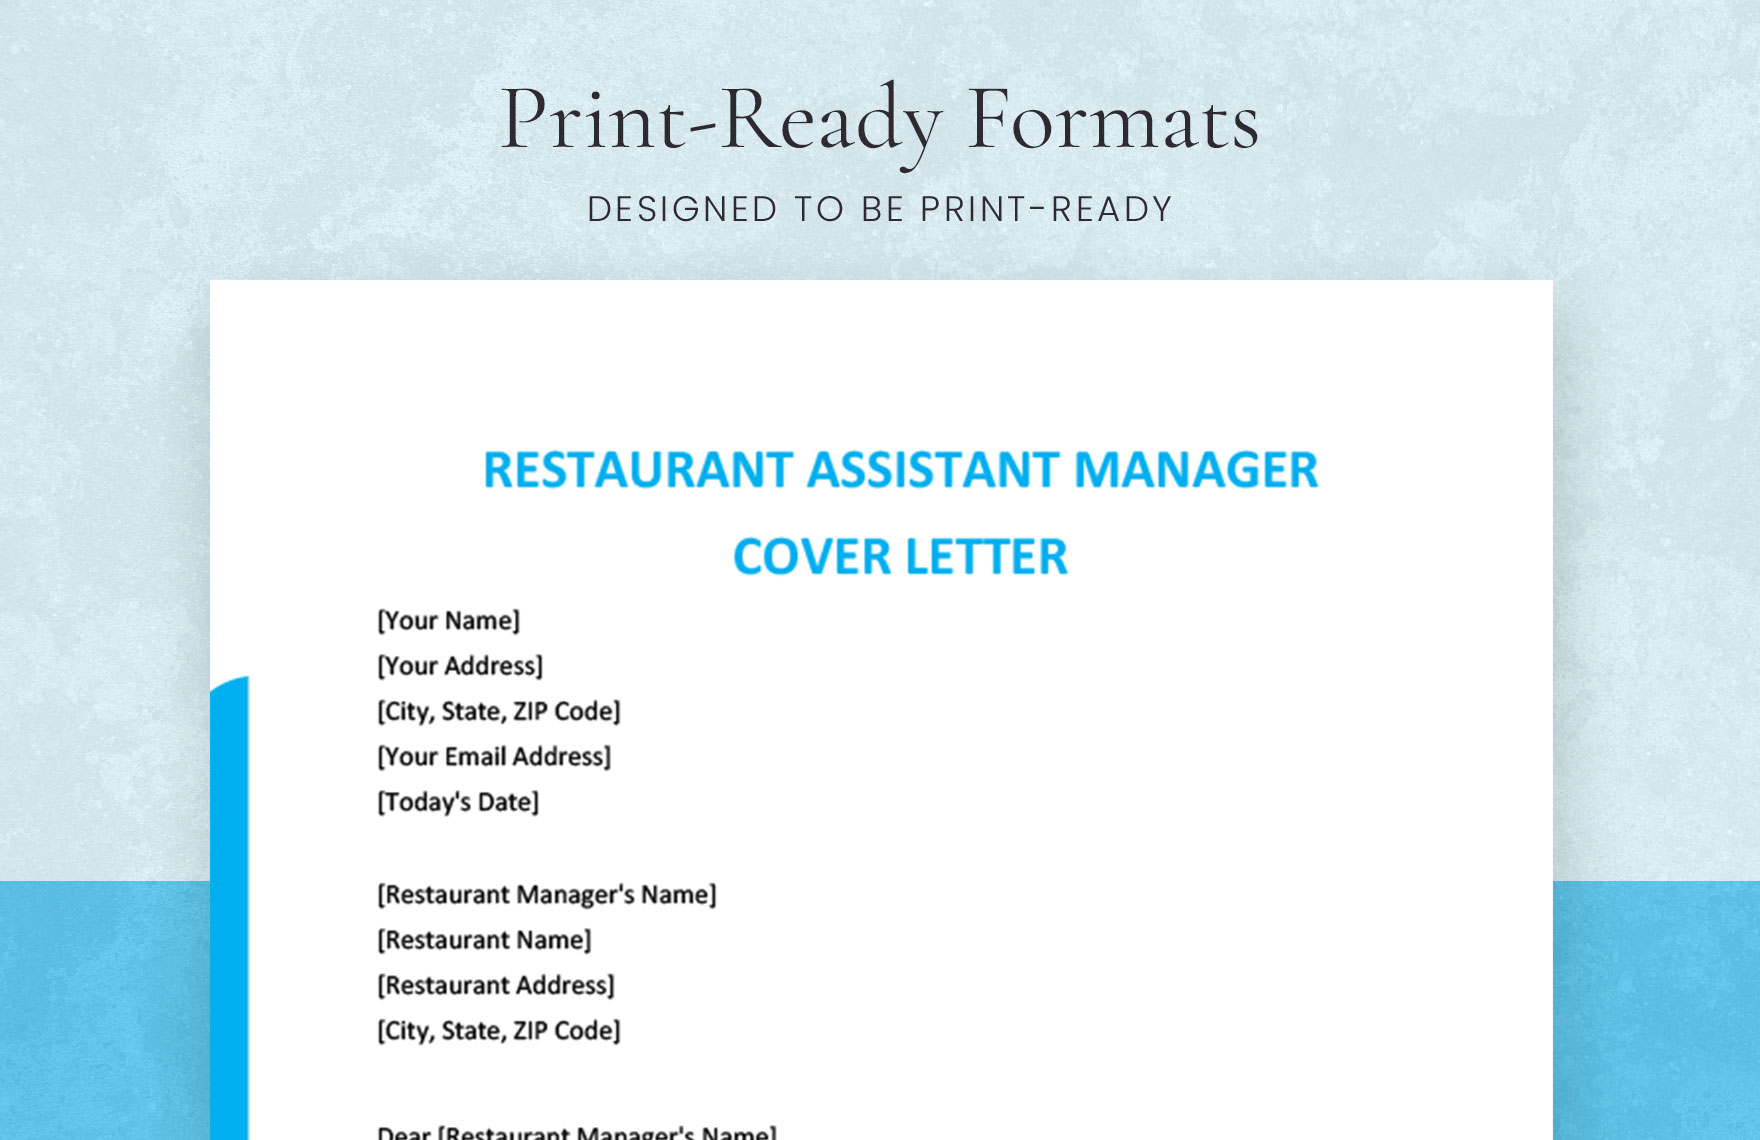 Restaurant Assistant Manager Cover Letter